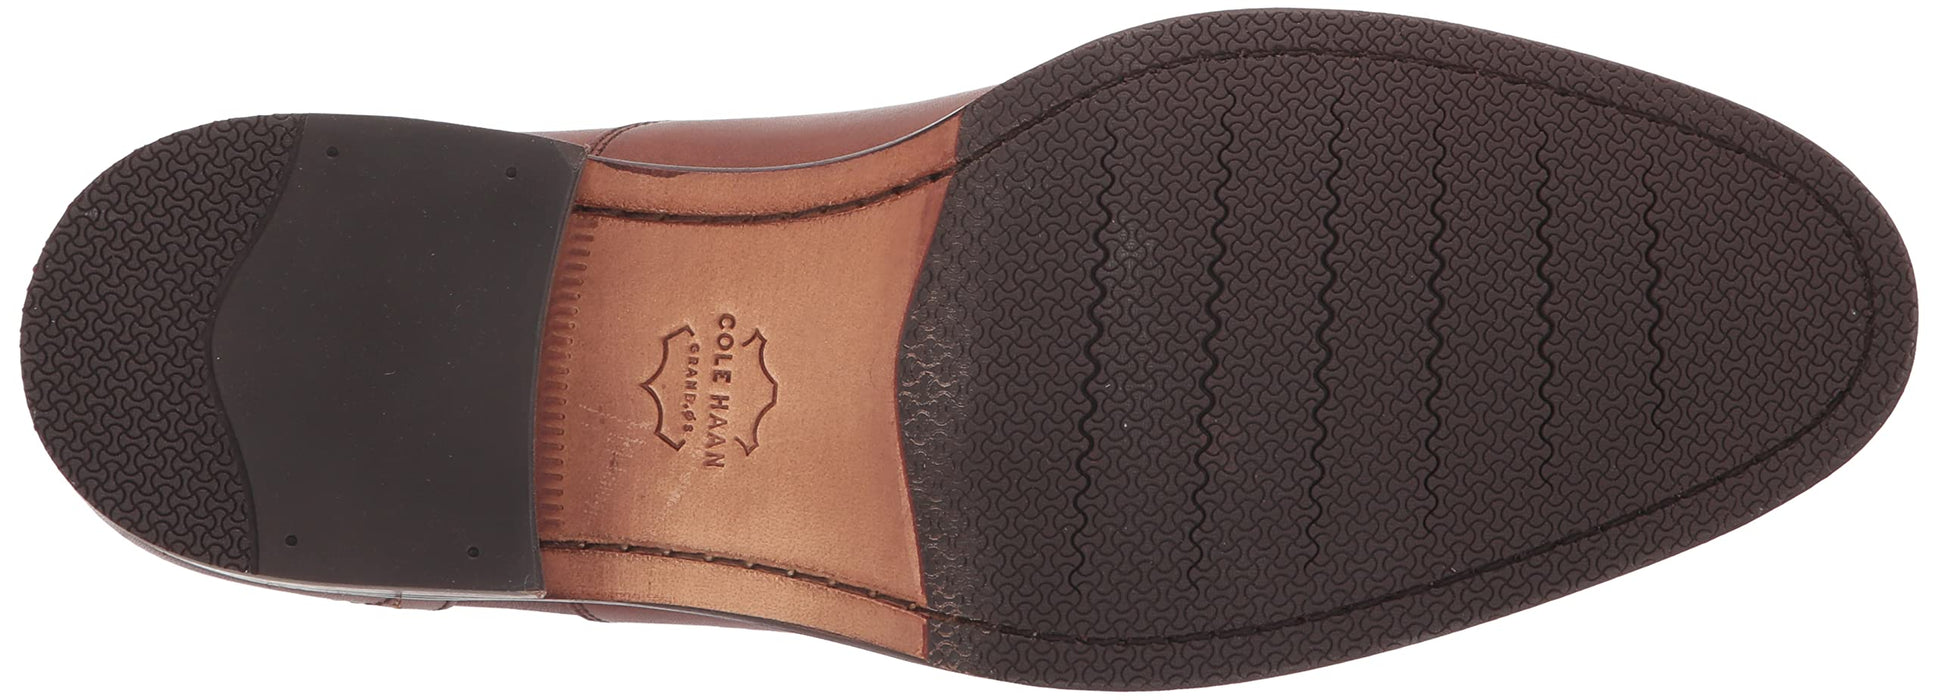 Cole Haan Men's Sawyer Cap Toe Leather Oxford Shoes